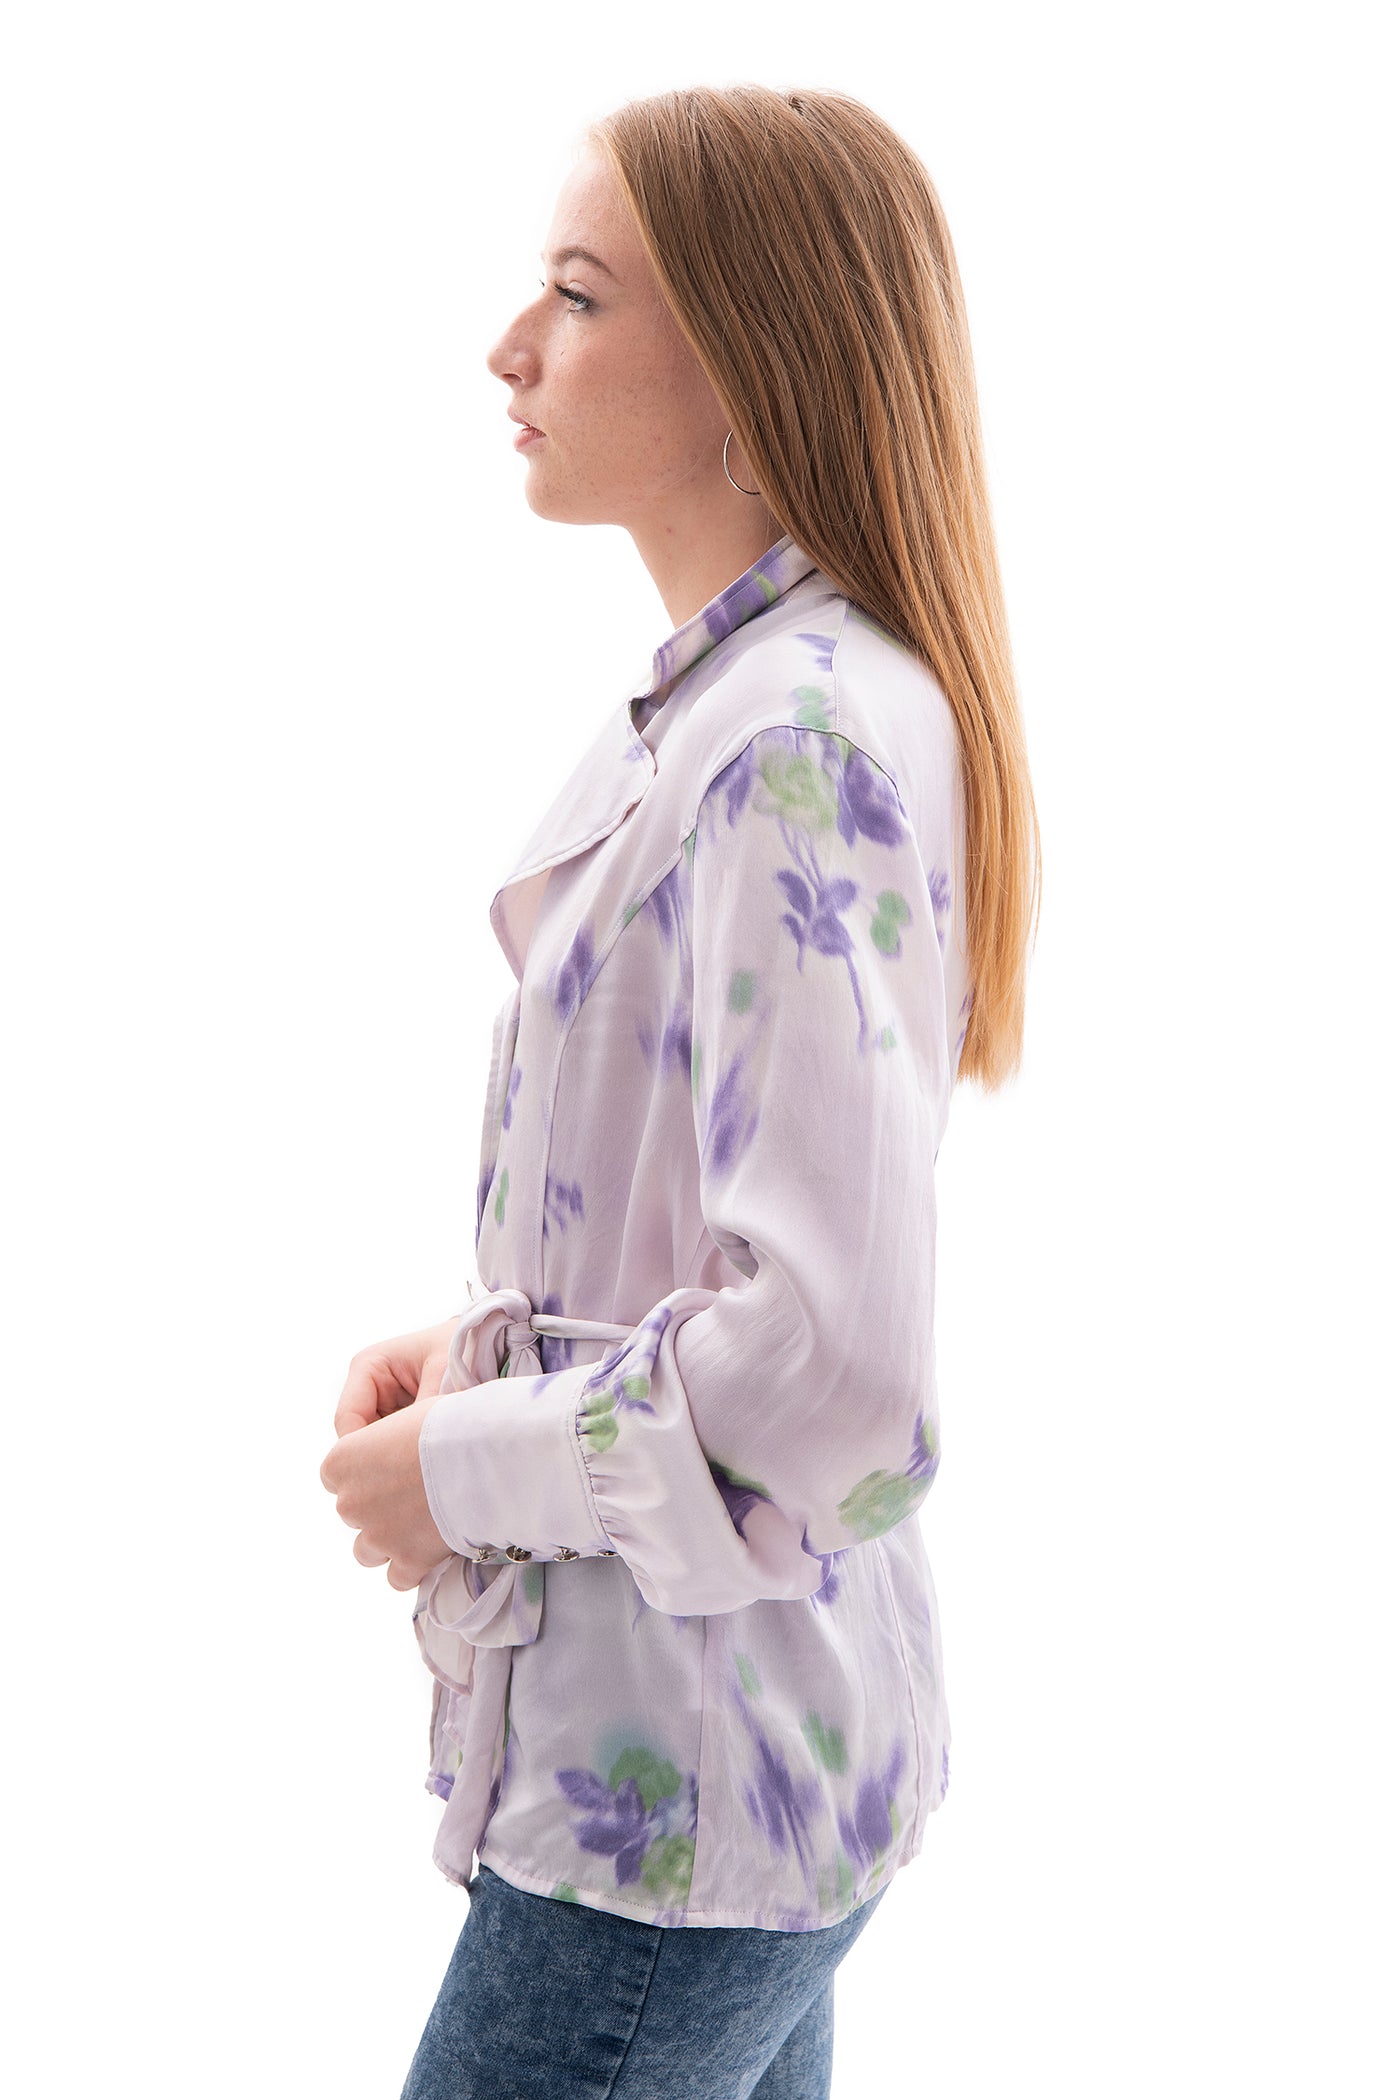 Escada silk purple floral blouse with waist tie